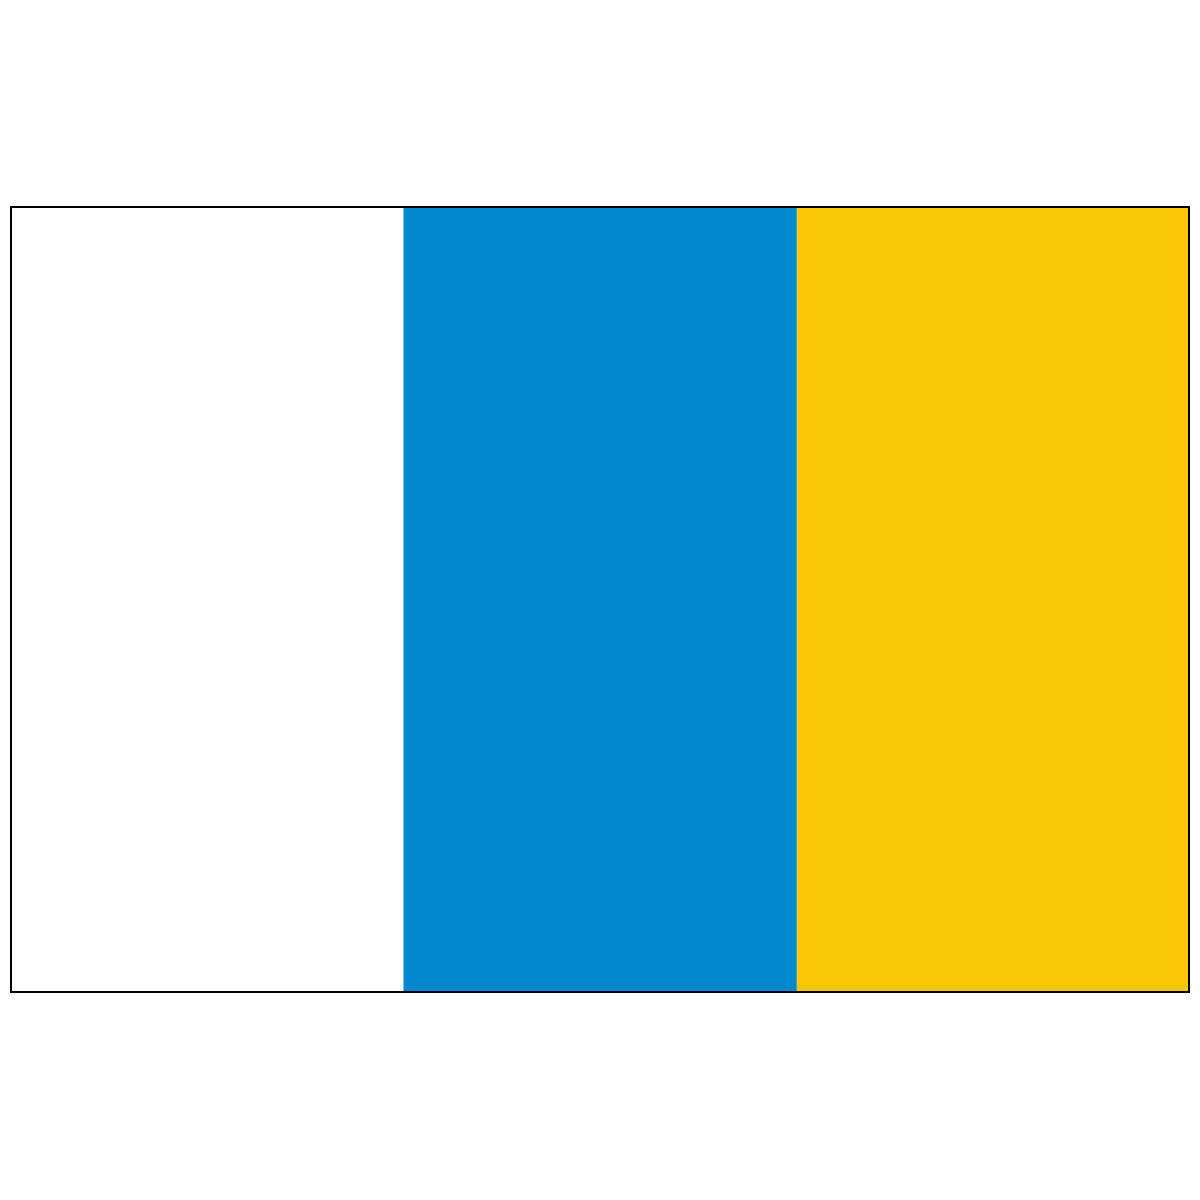 Canary Islands - World Flag